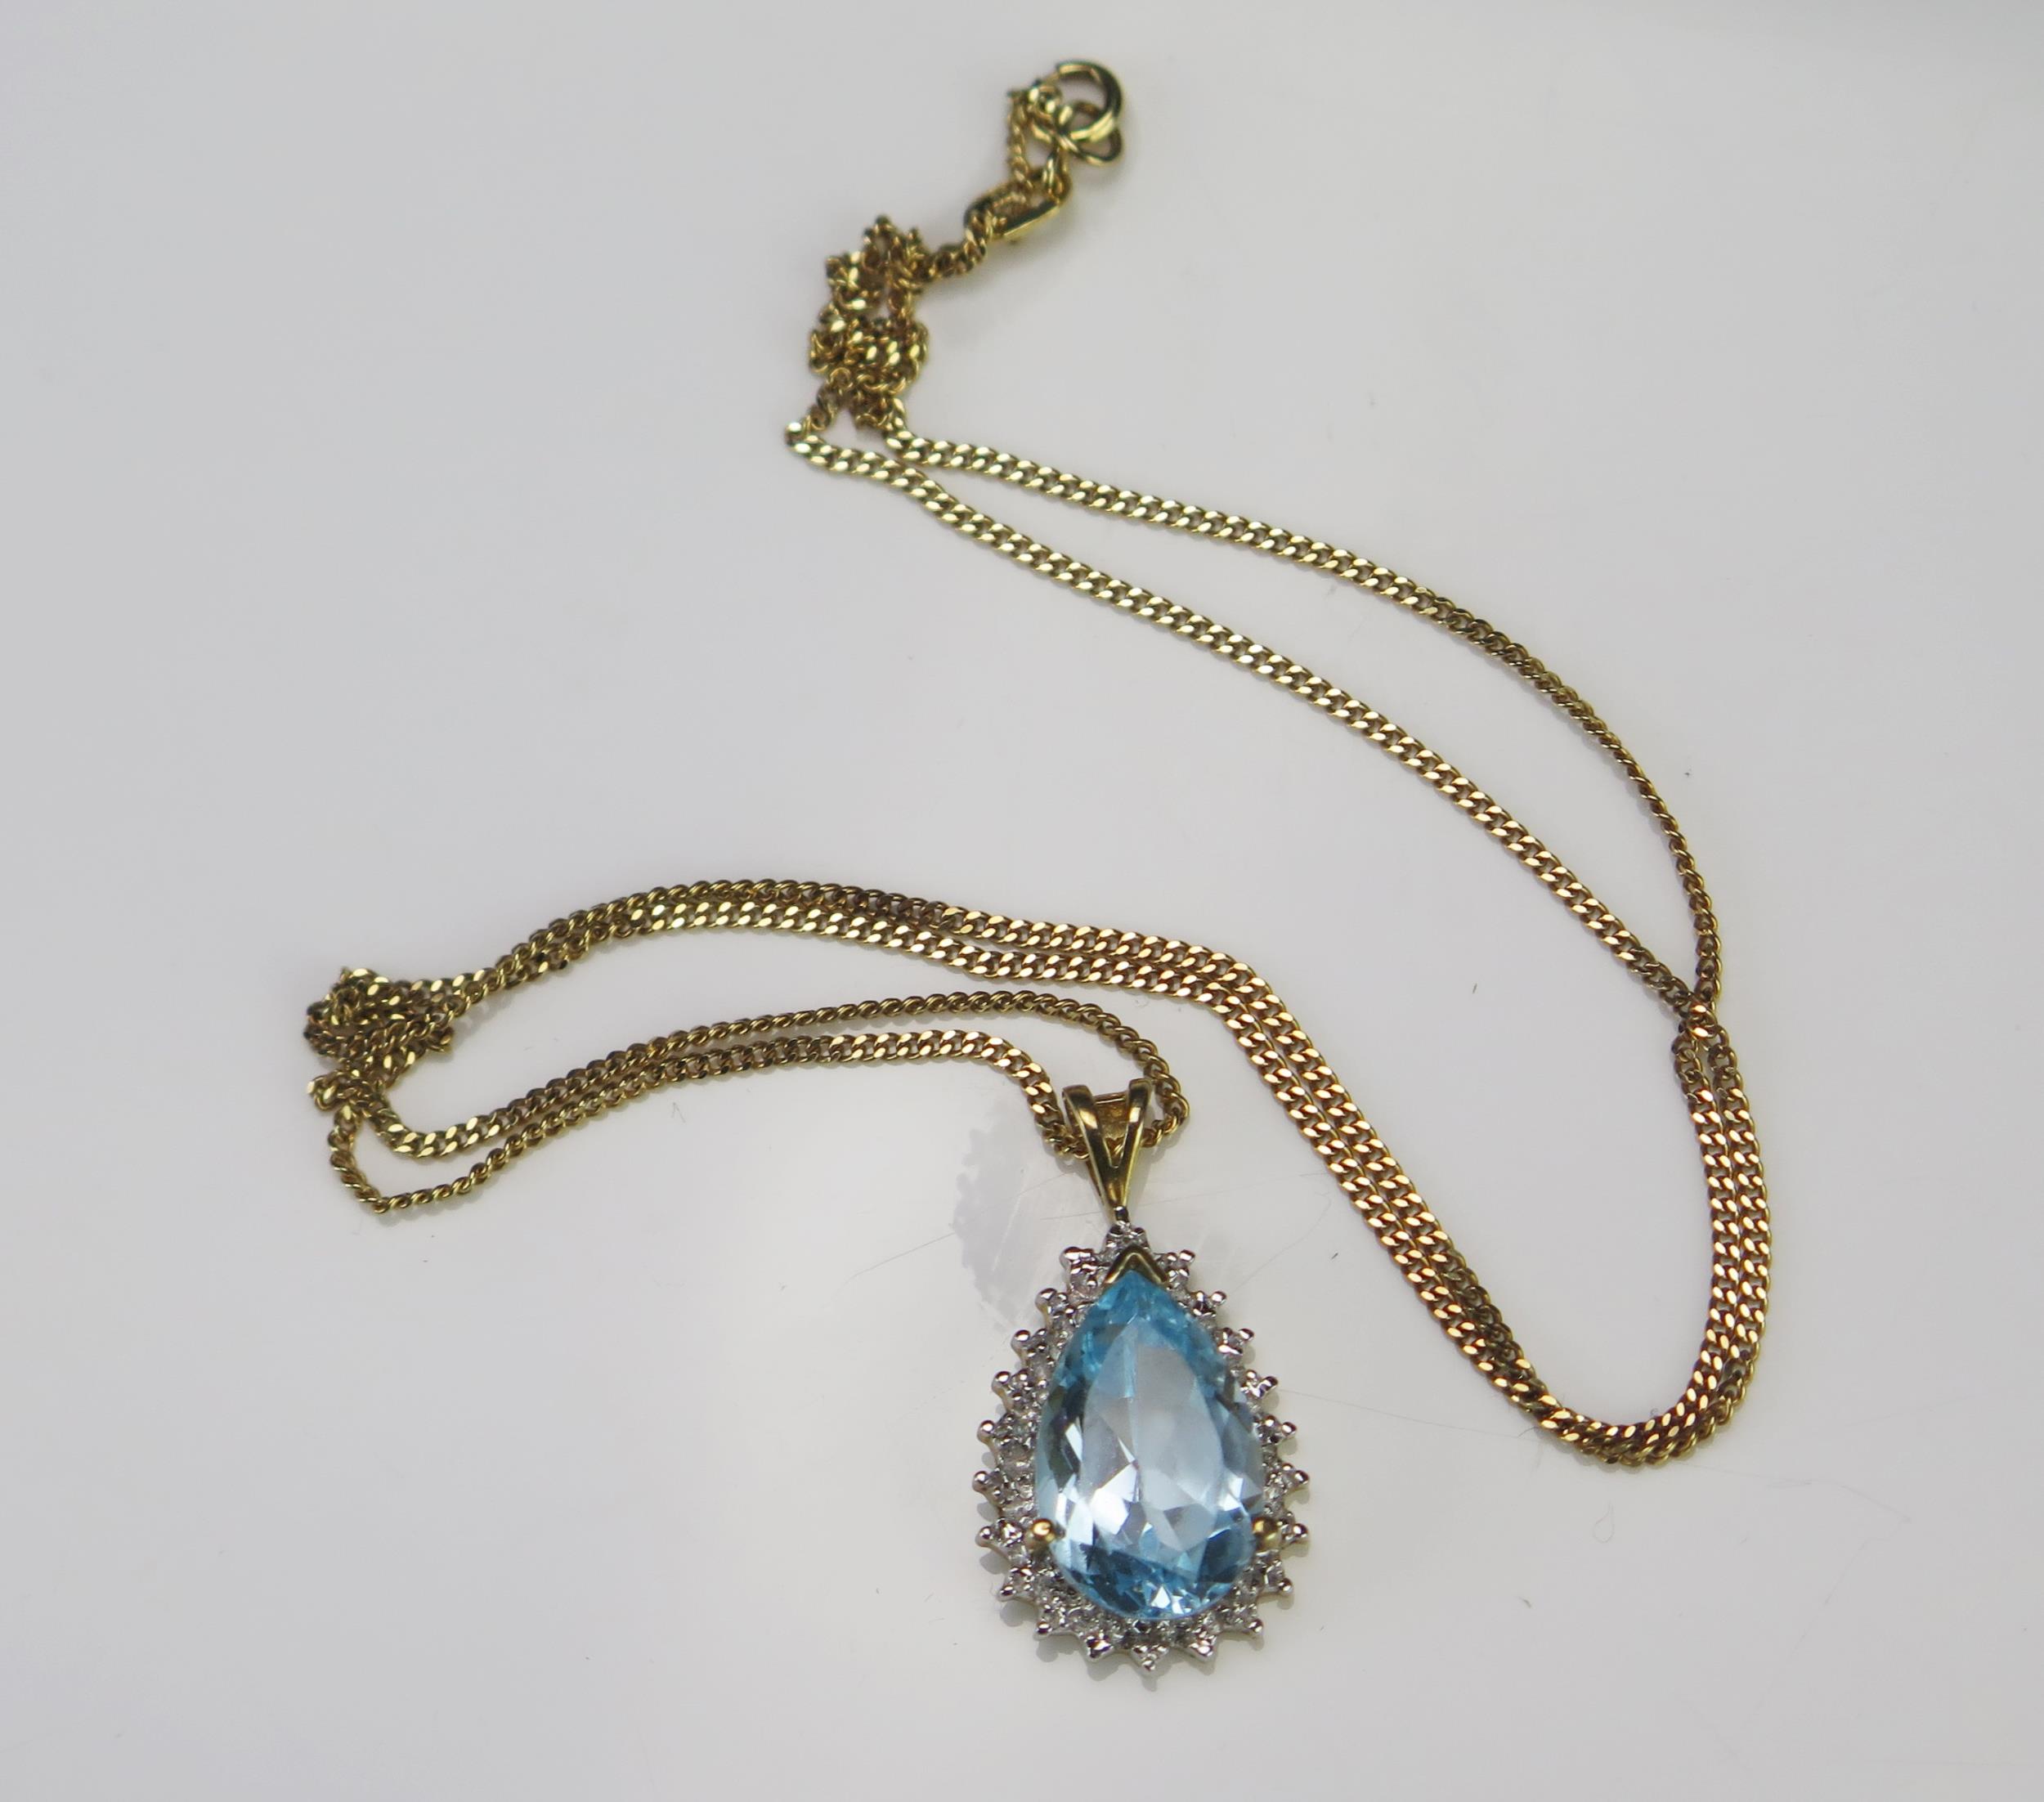 A Blue Topaz Tear Drop Pendant (24.3mm drop) on an 18" (46cm) 9ct gold chain, hallmarked, 2.57g